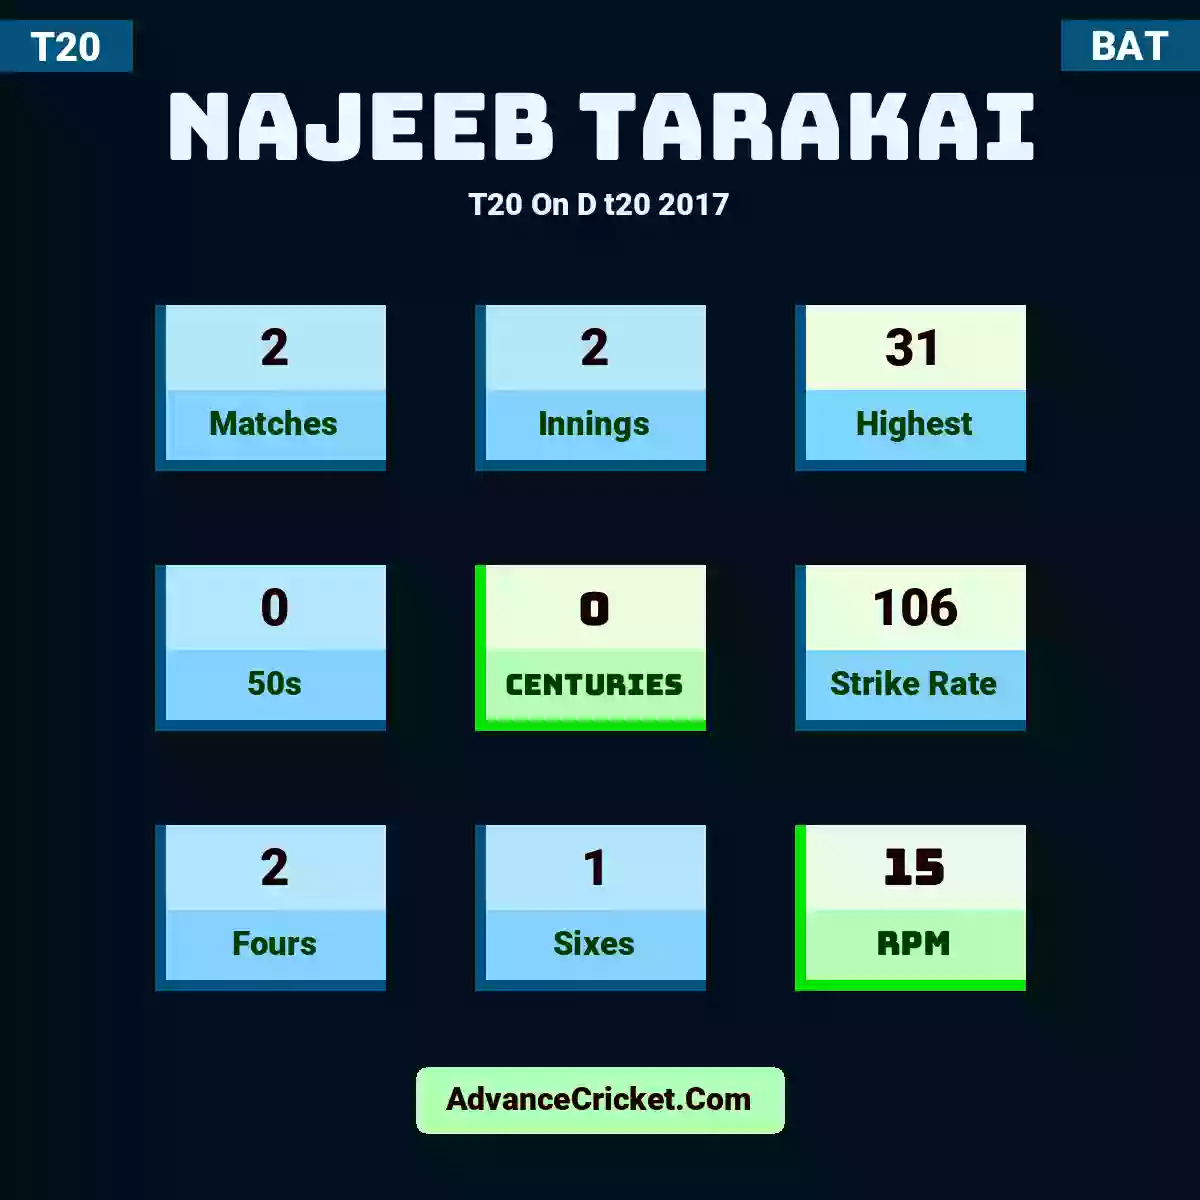 Najeeb Tarakai T20  On D t20 2017, Najeeb Tarakai played 2 matches, scored 31 runs as highest, 0 half-centuries, and 0 centuries, with a strike rate of 106. N.Tarakai hit 2 fours and 1 sixes, with an RPM of 15.